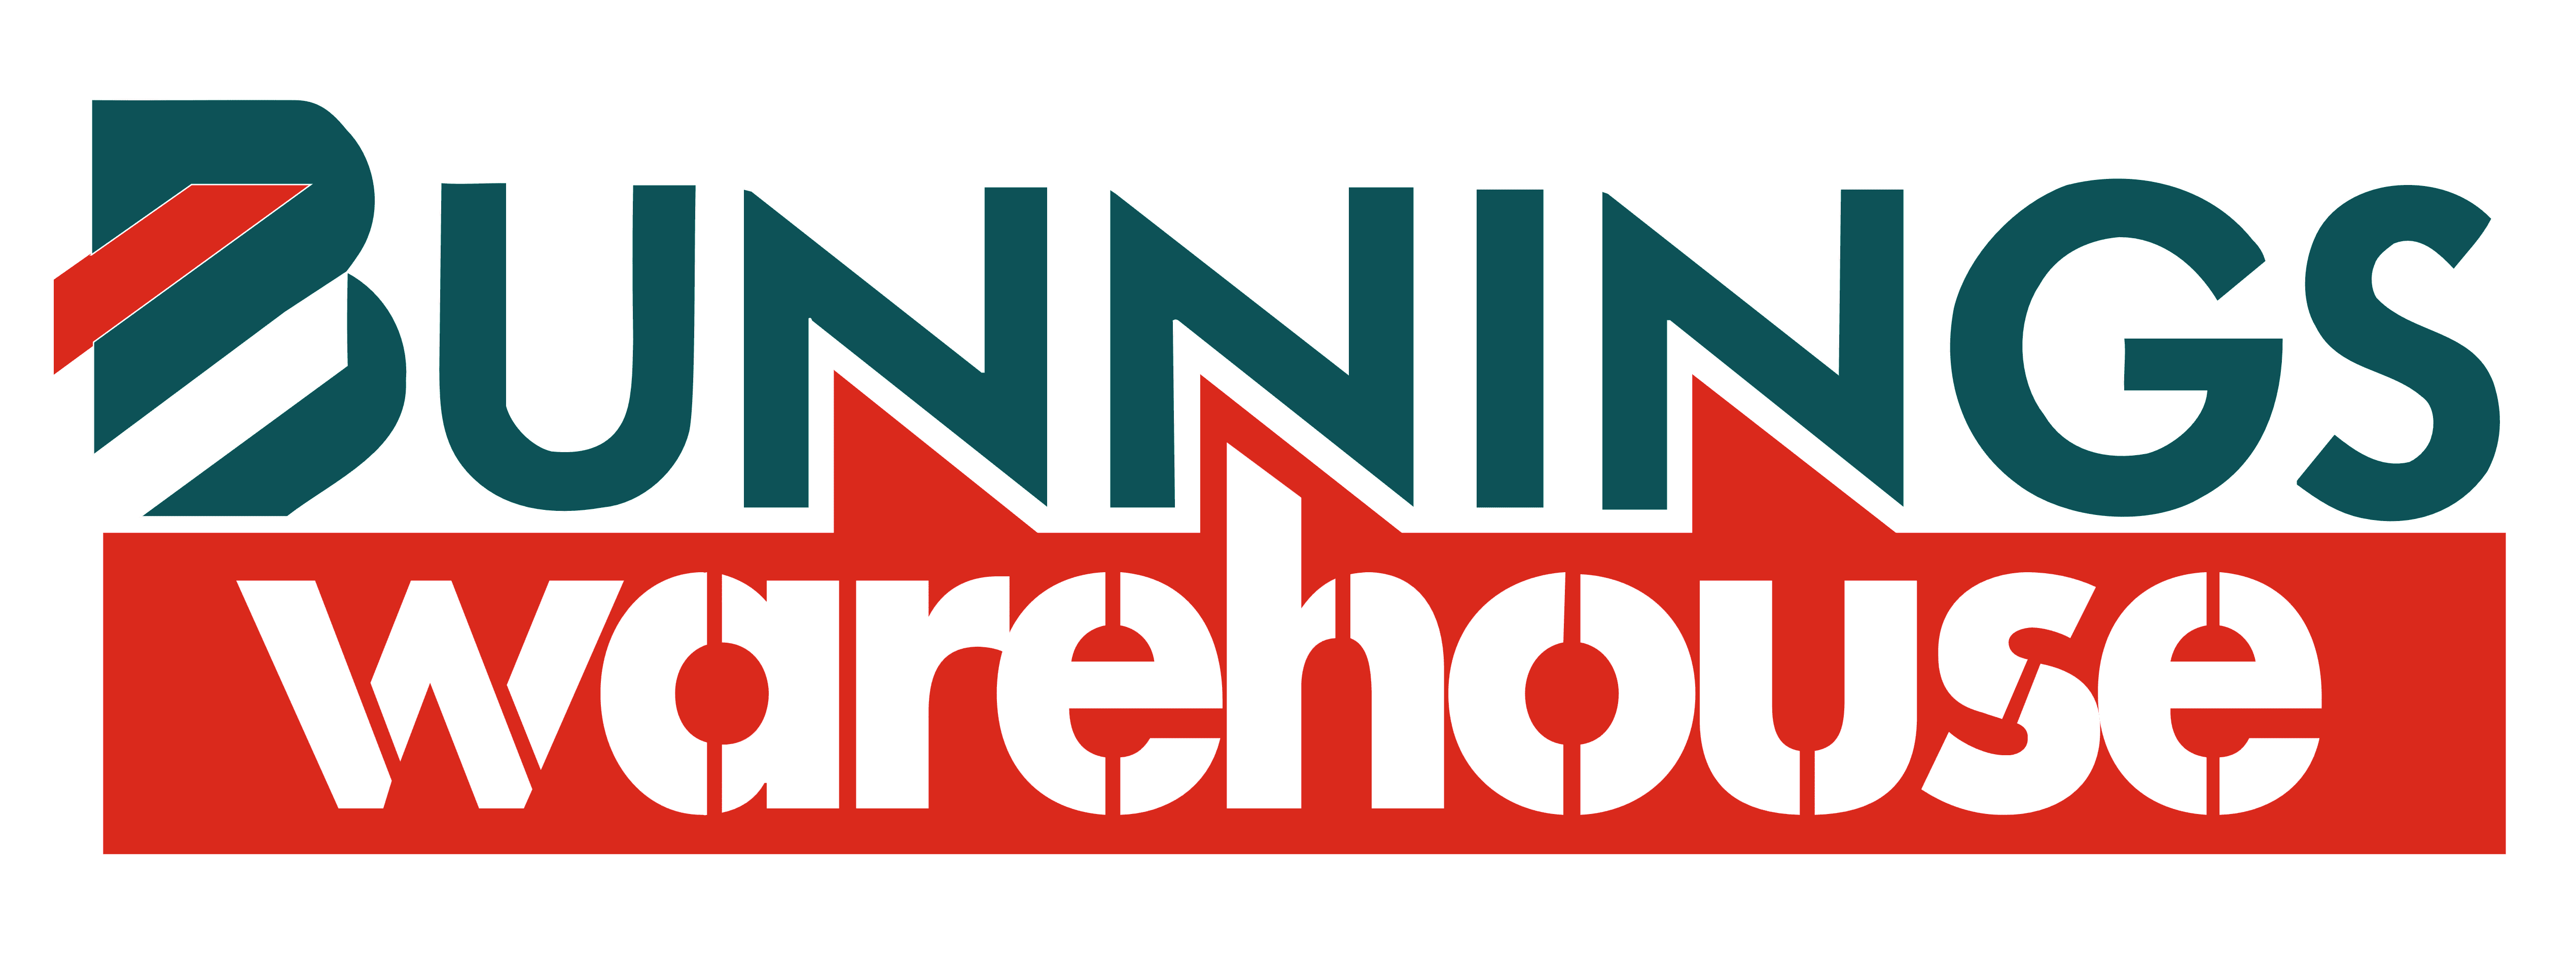 Bunnings Warehouse Logo - Keen To Clean